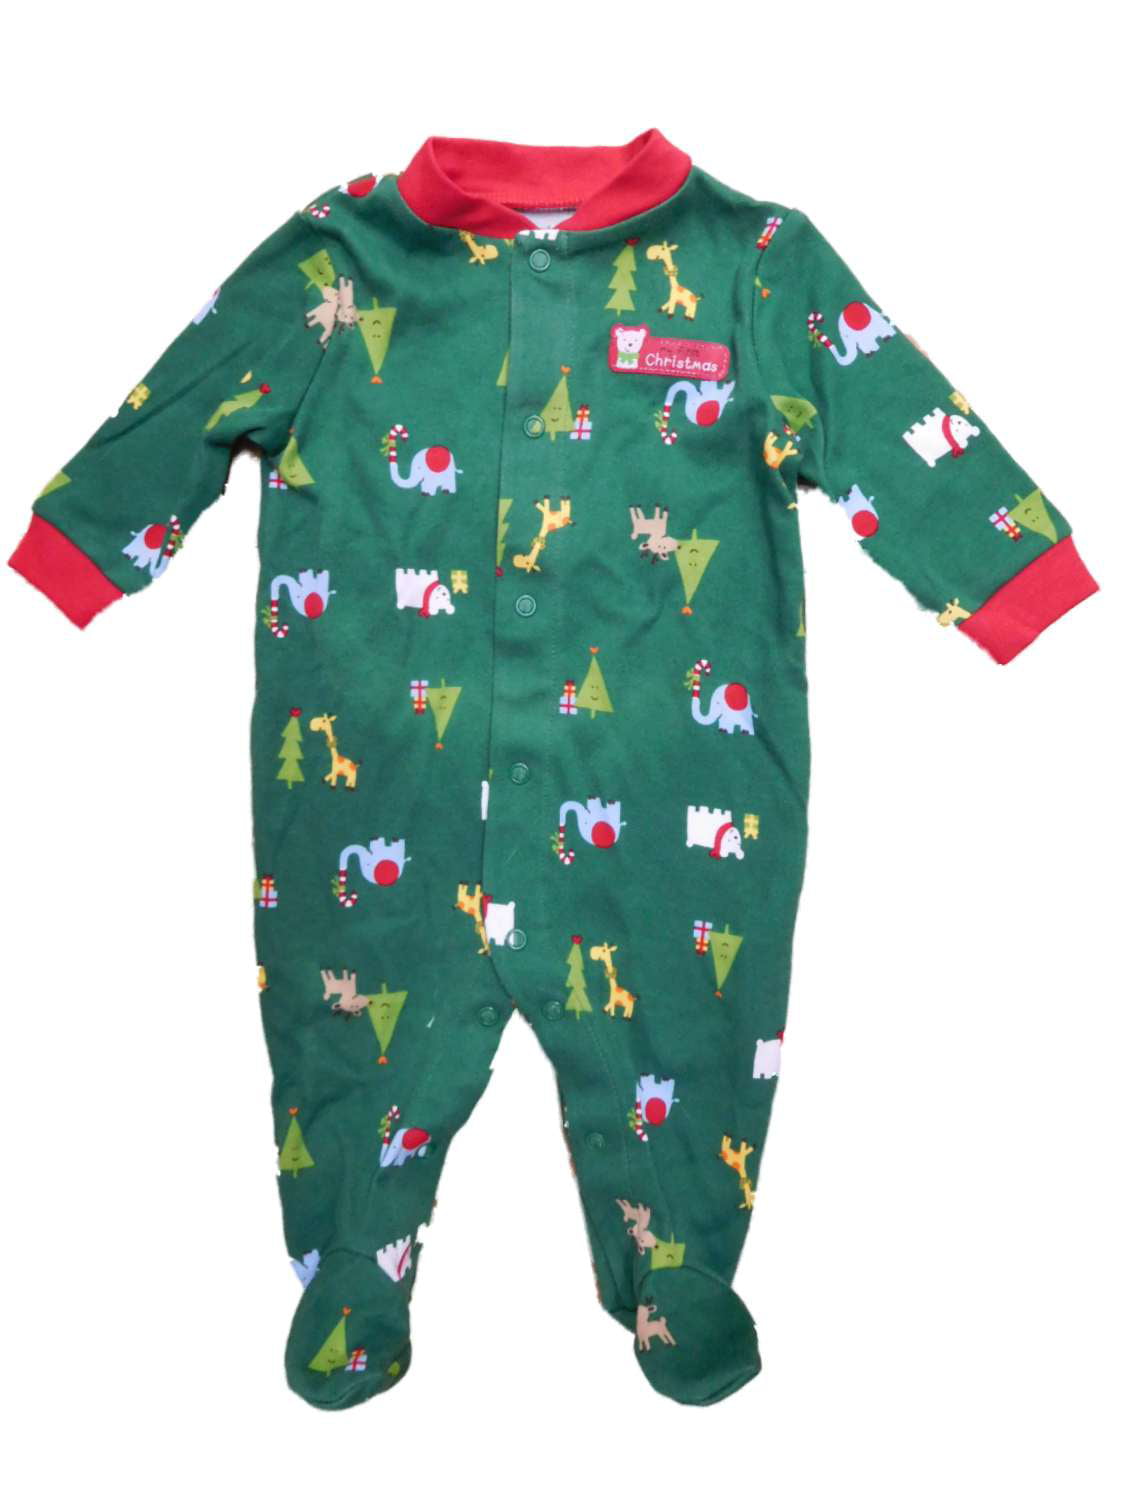 Carters Infant Boys My First Christmas Holiday Zoo Sleeper Sleep & Play 0-3m 